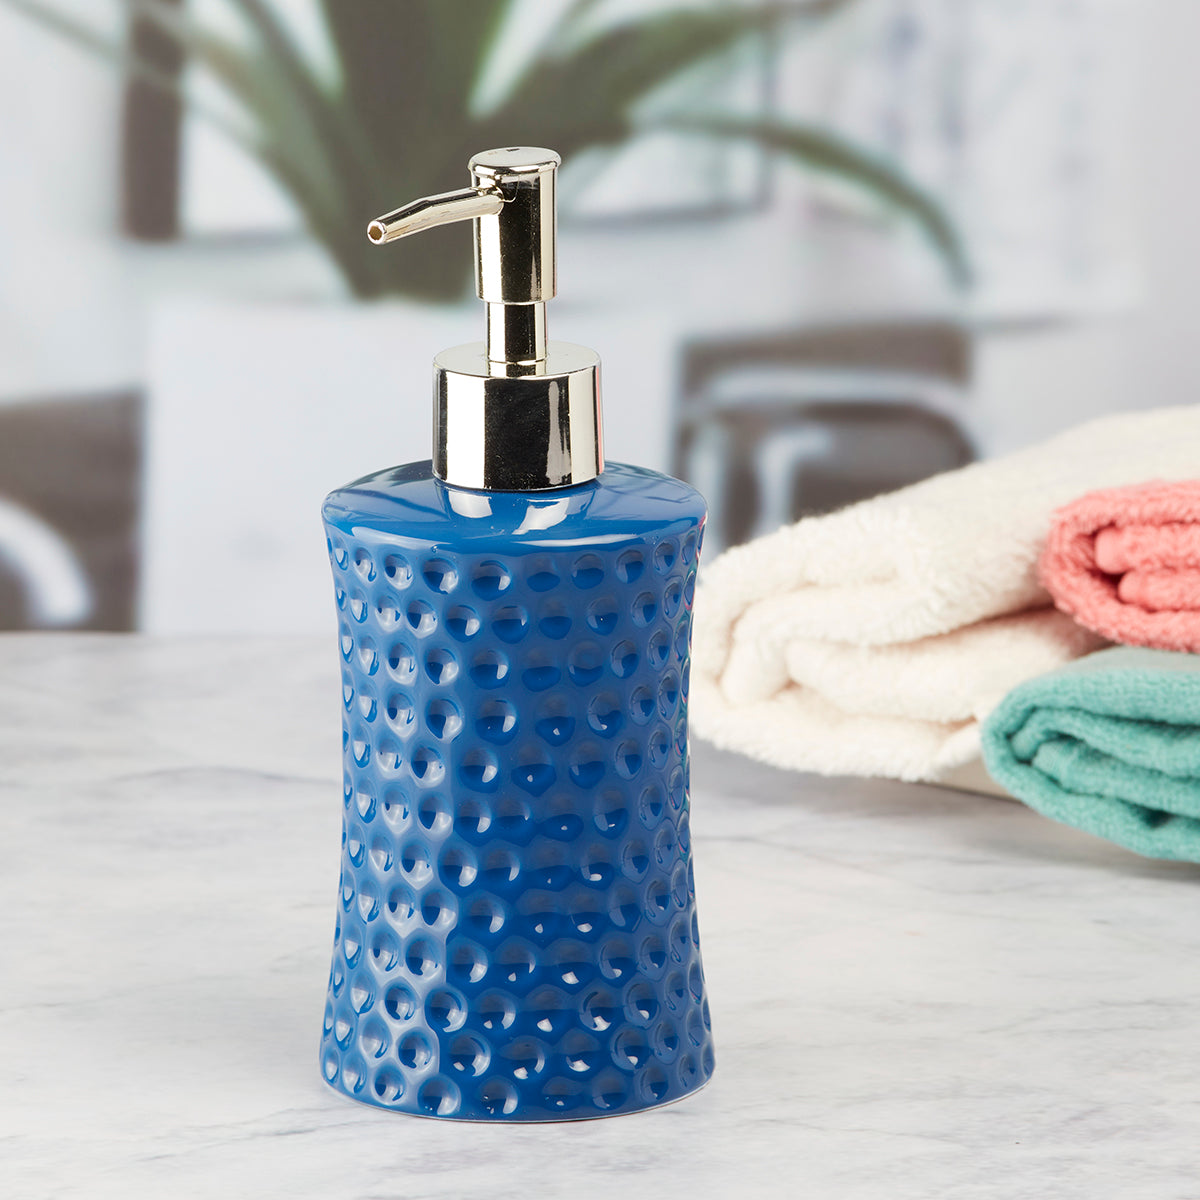 Ceramic Soap Dispenser handwash Pump for Bathroom, Set of 1, Blue (8038)